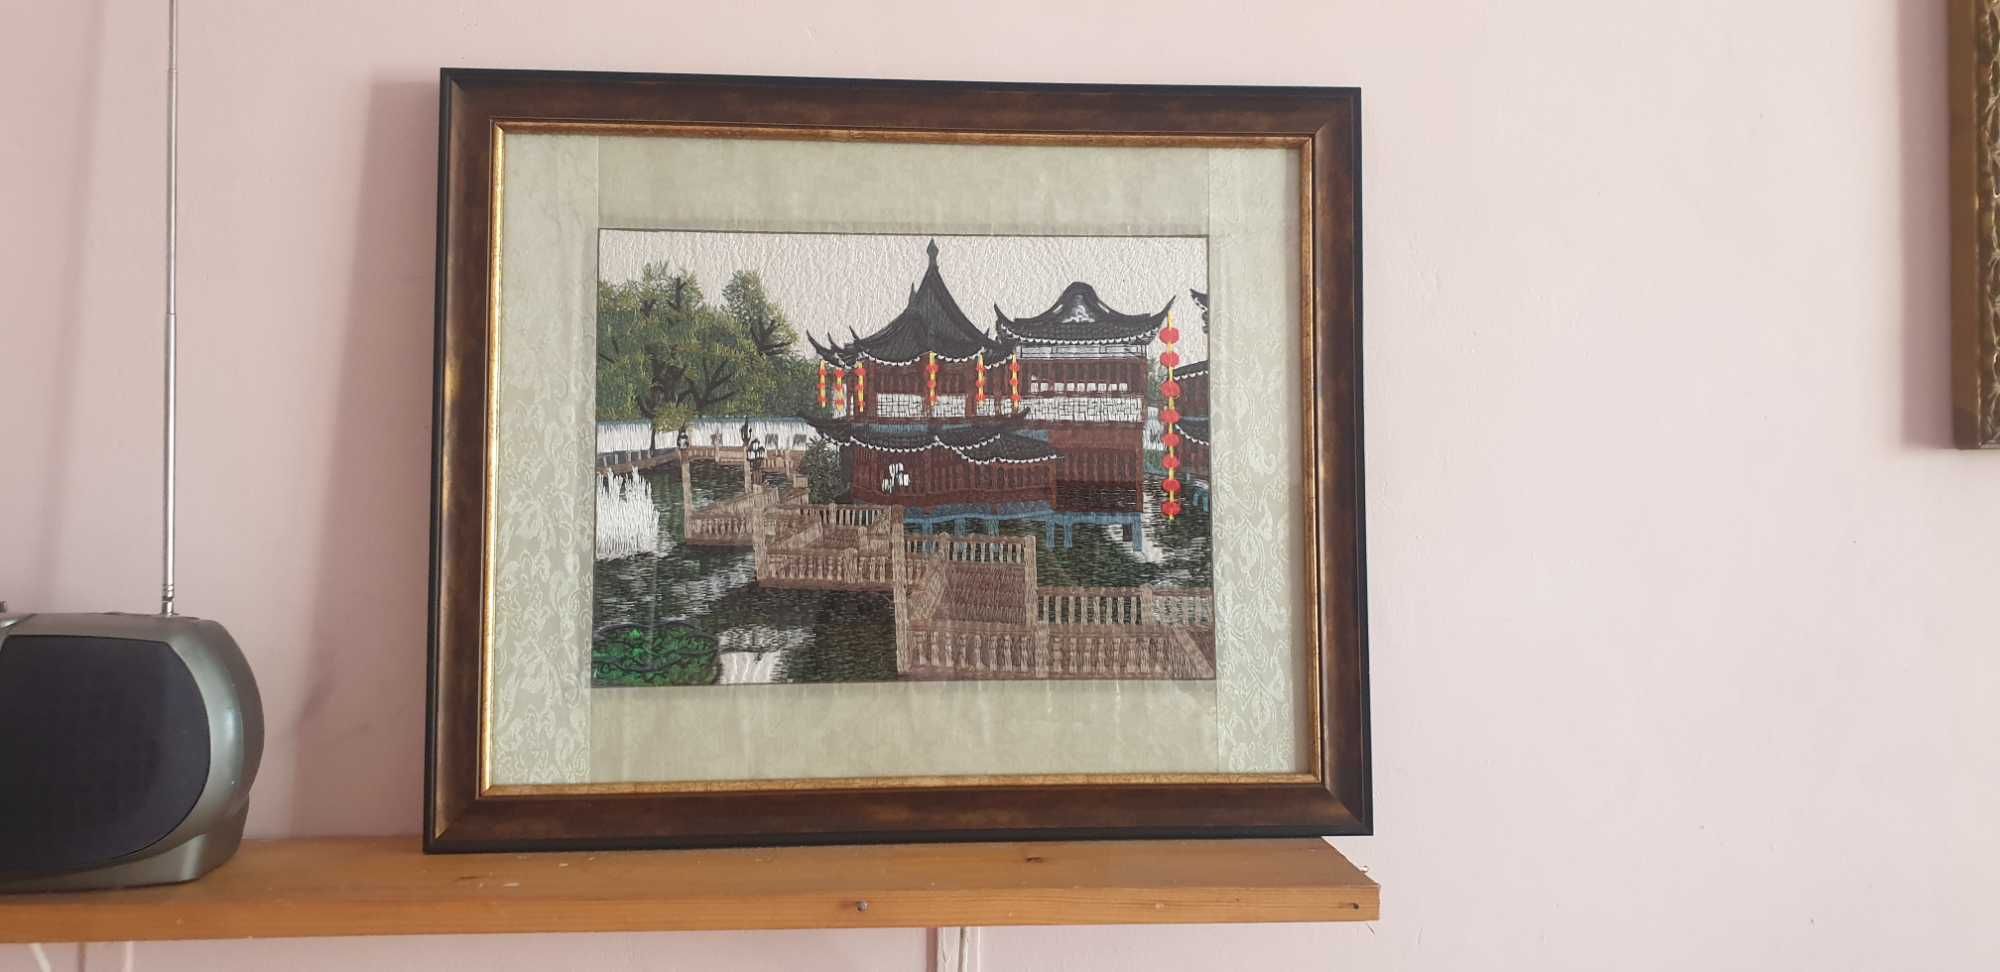 chińska architektura, obraz wyszywany na tkaninie